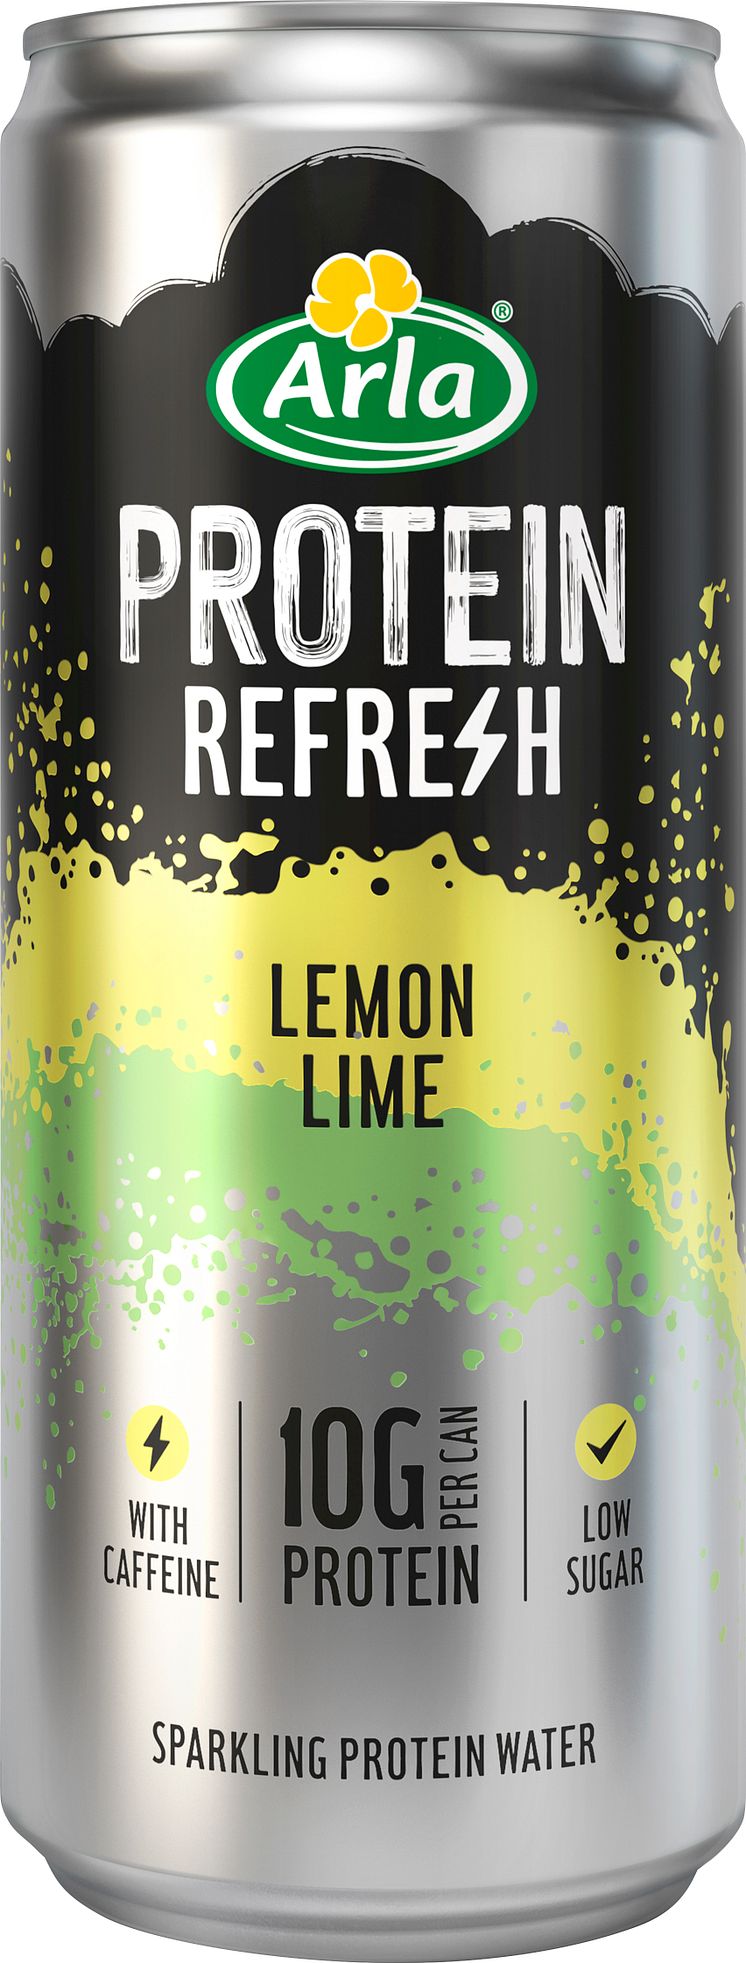 Arla Protein Refresh Lemon-Lime-HiRes